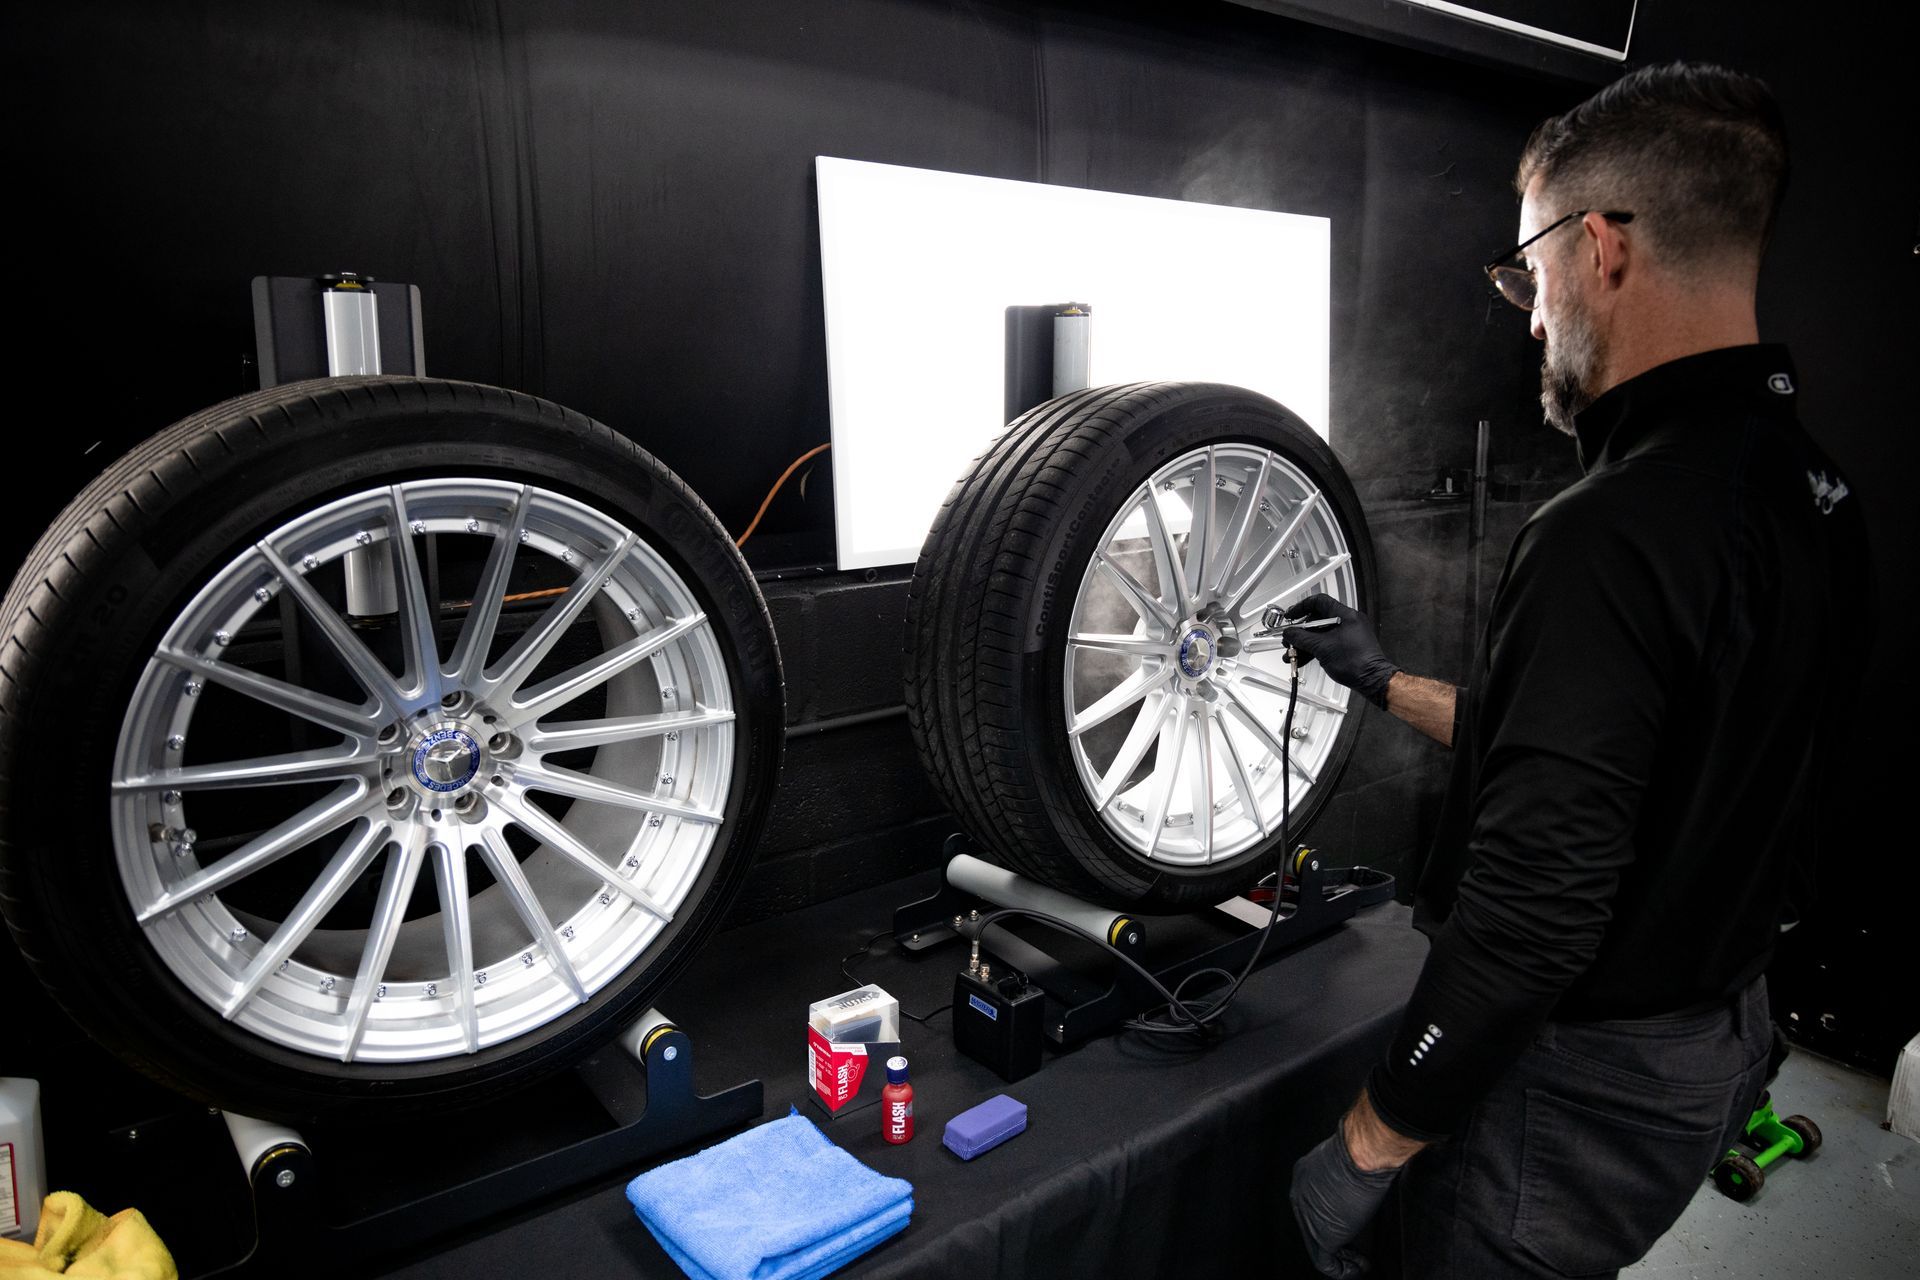 A man is working on a car wheel in a garage.